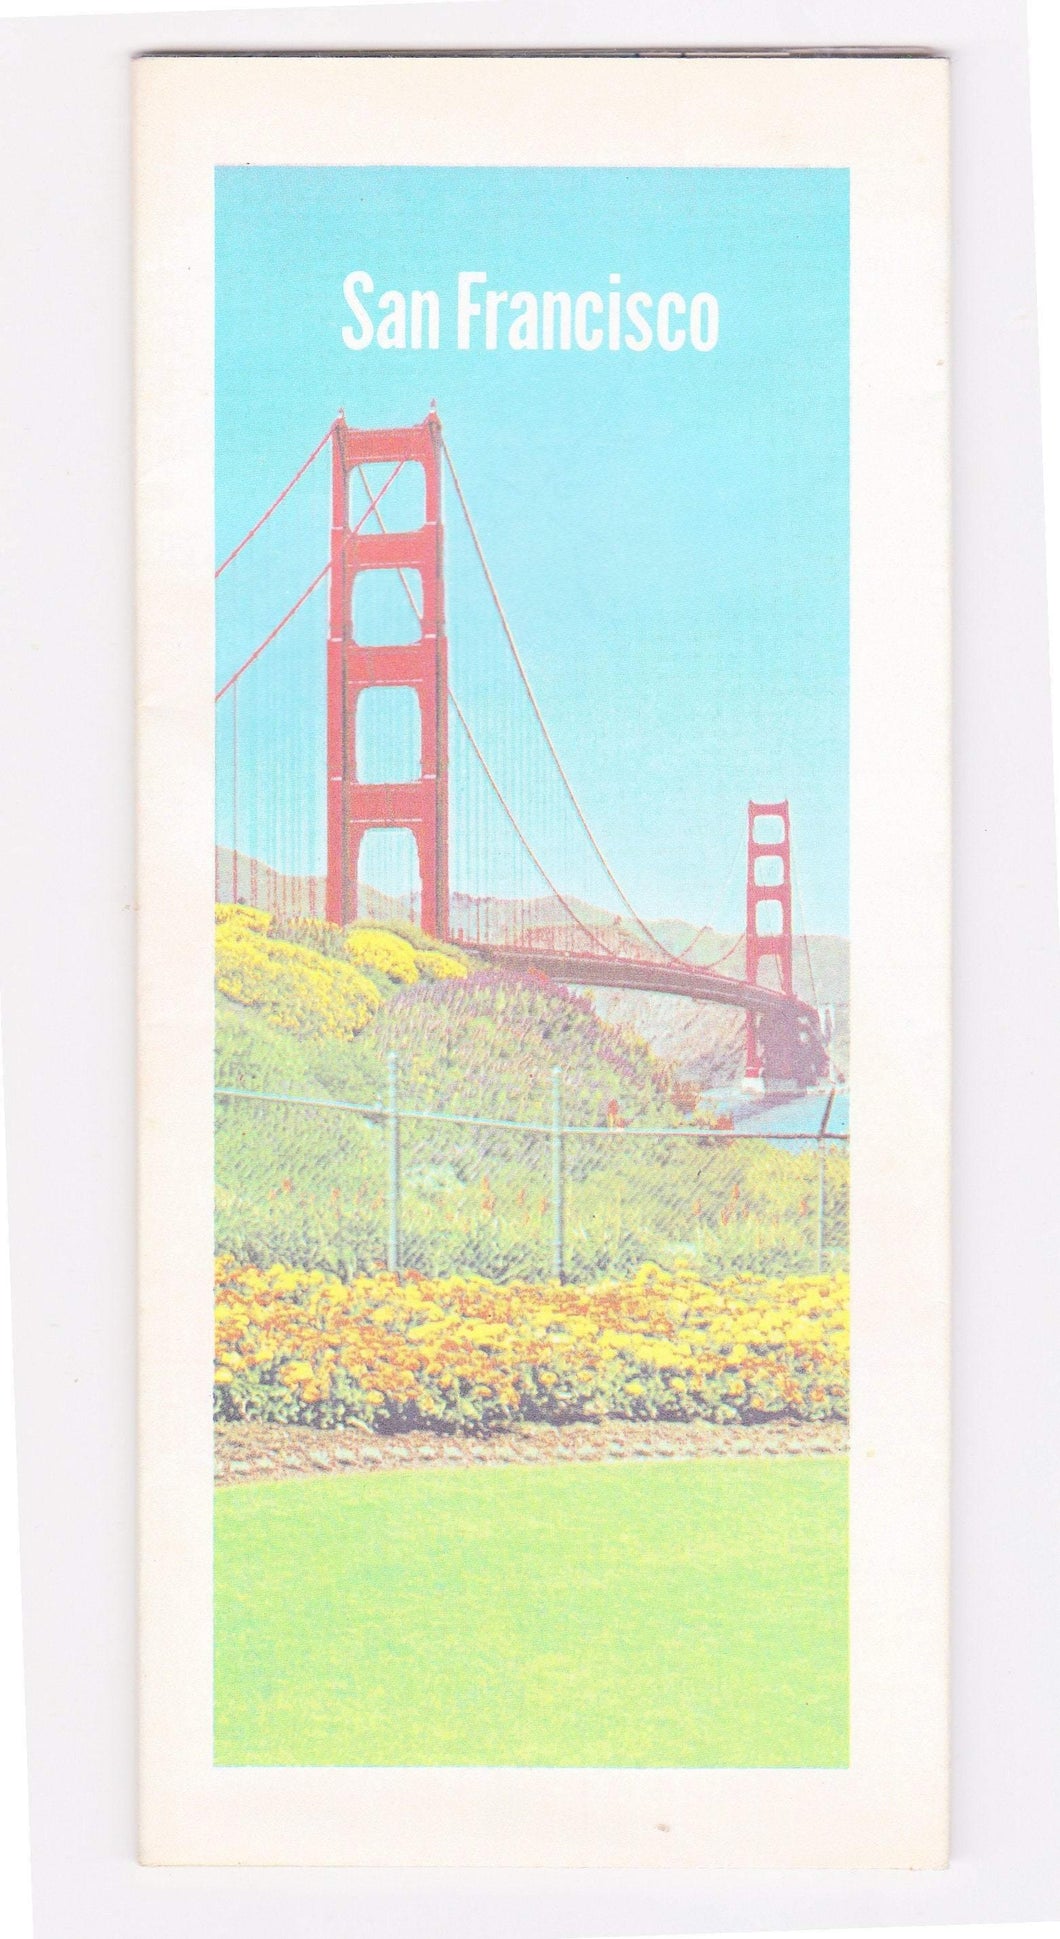 AAA San Francisco 1979 Street Map California - TulipStuff